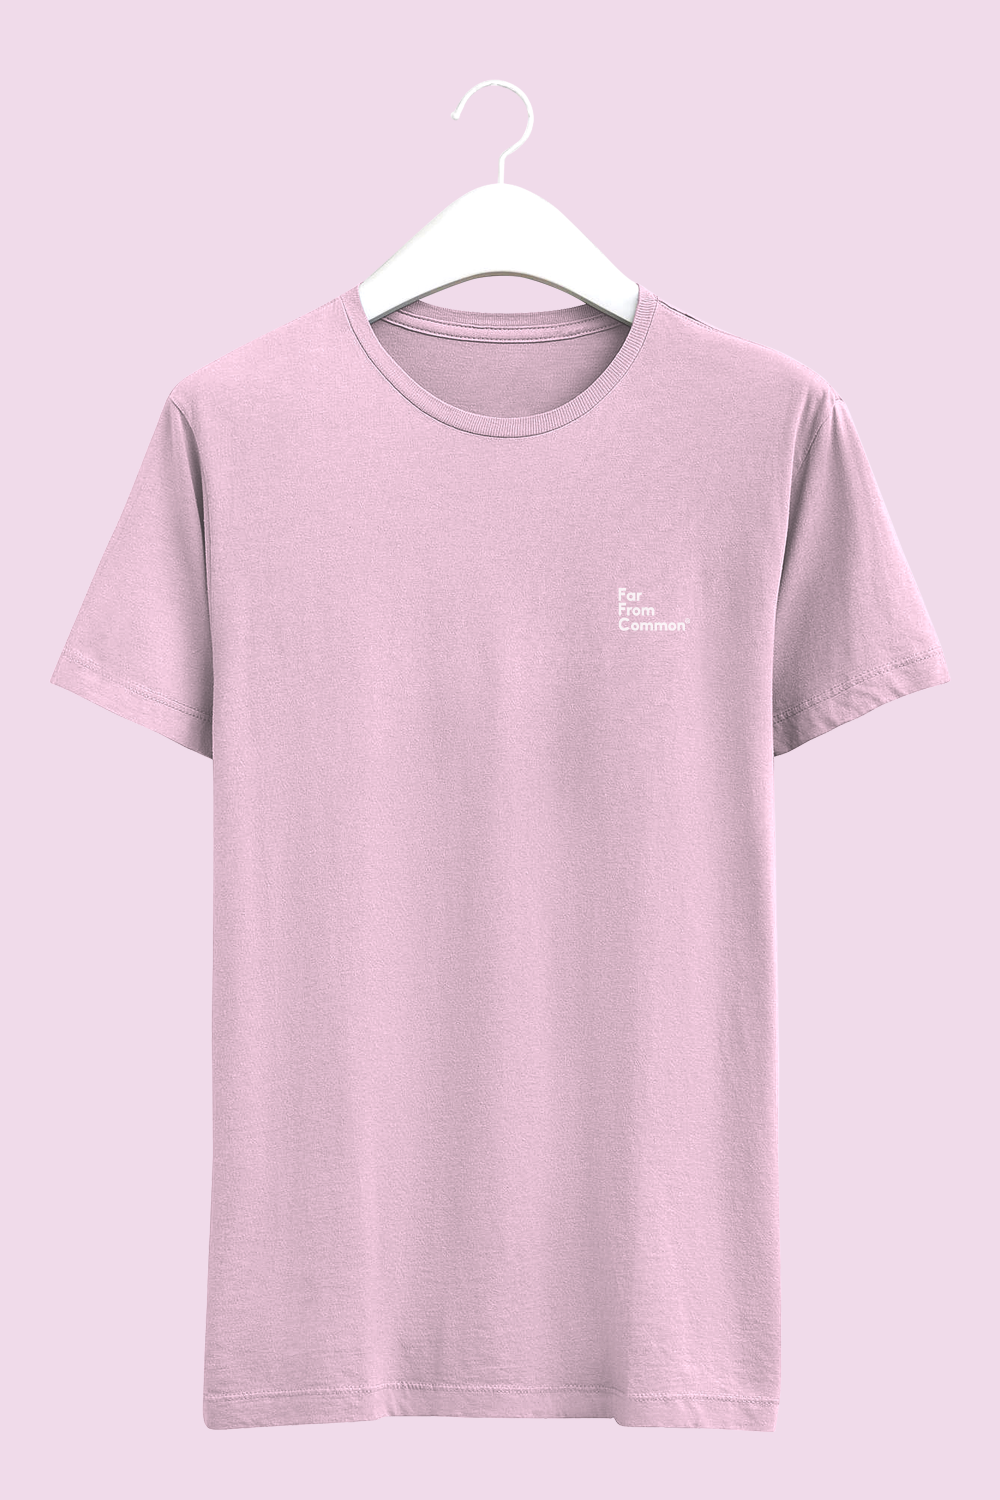 Unisex Basics T-shirt Light Pink